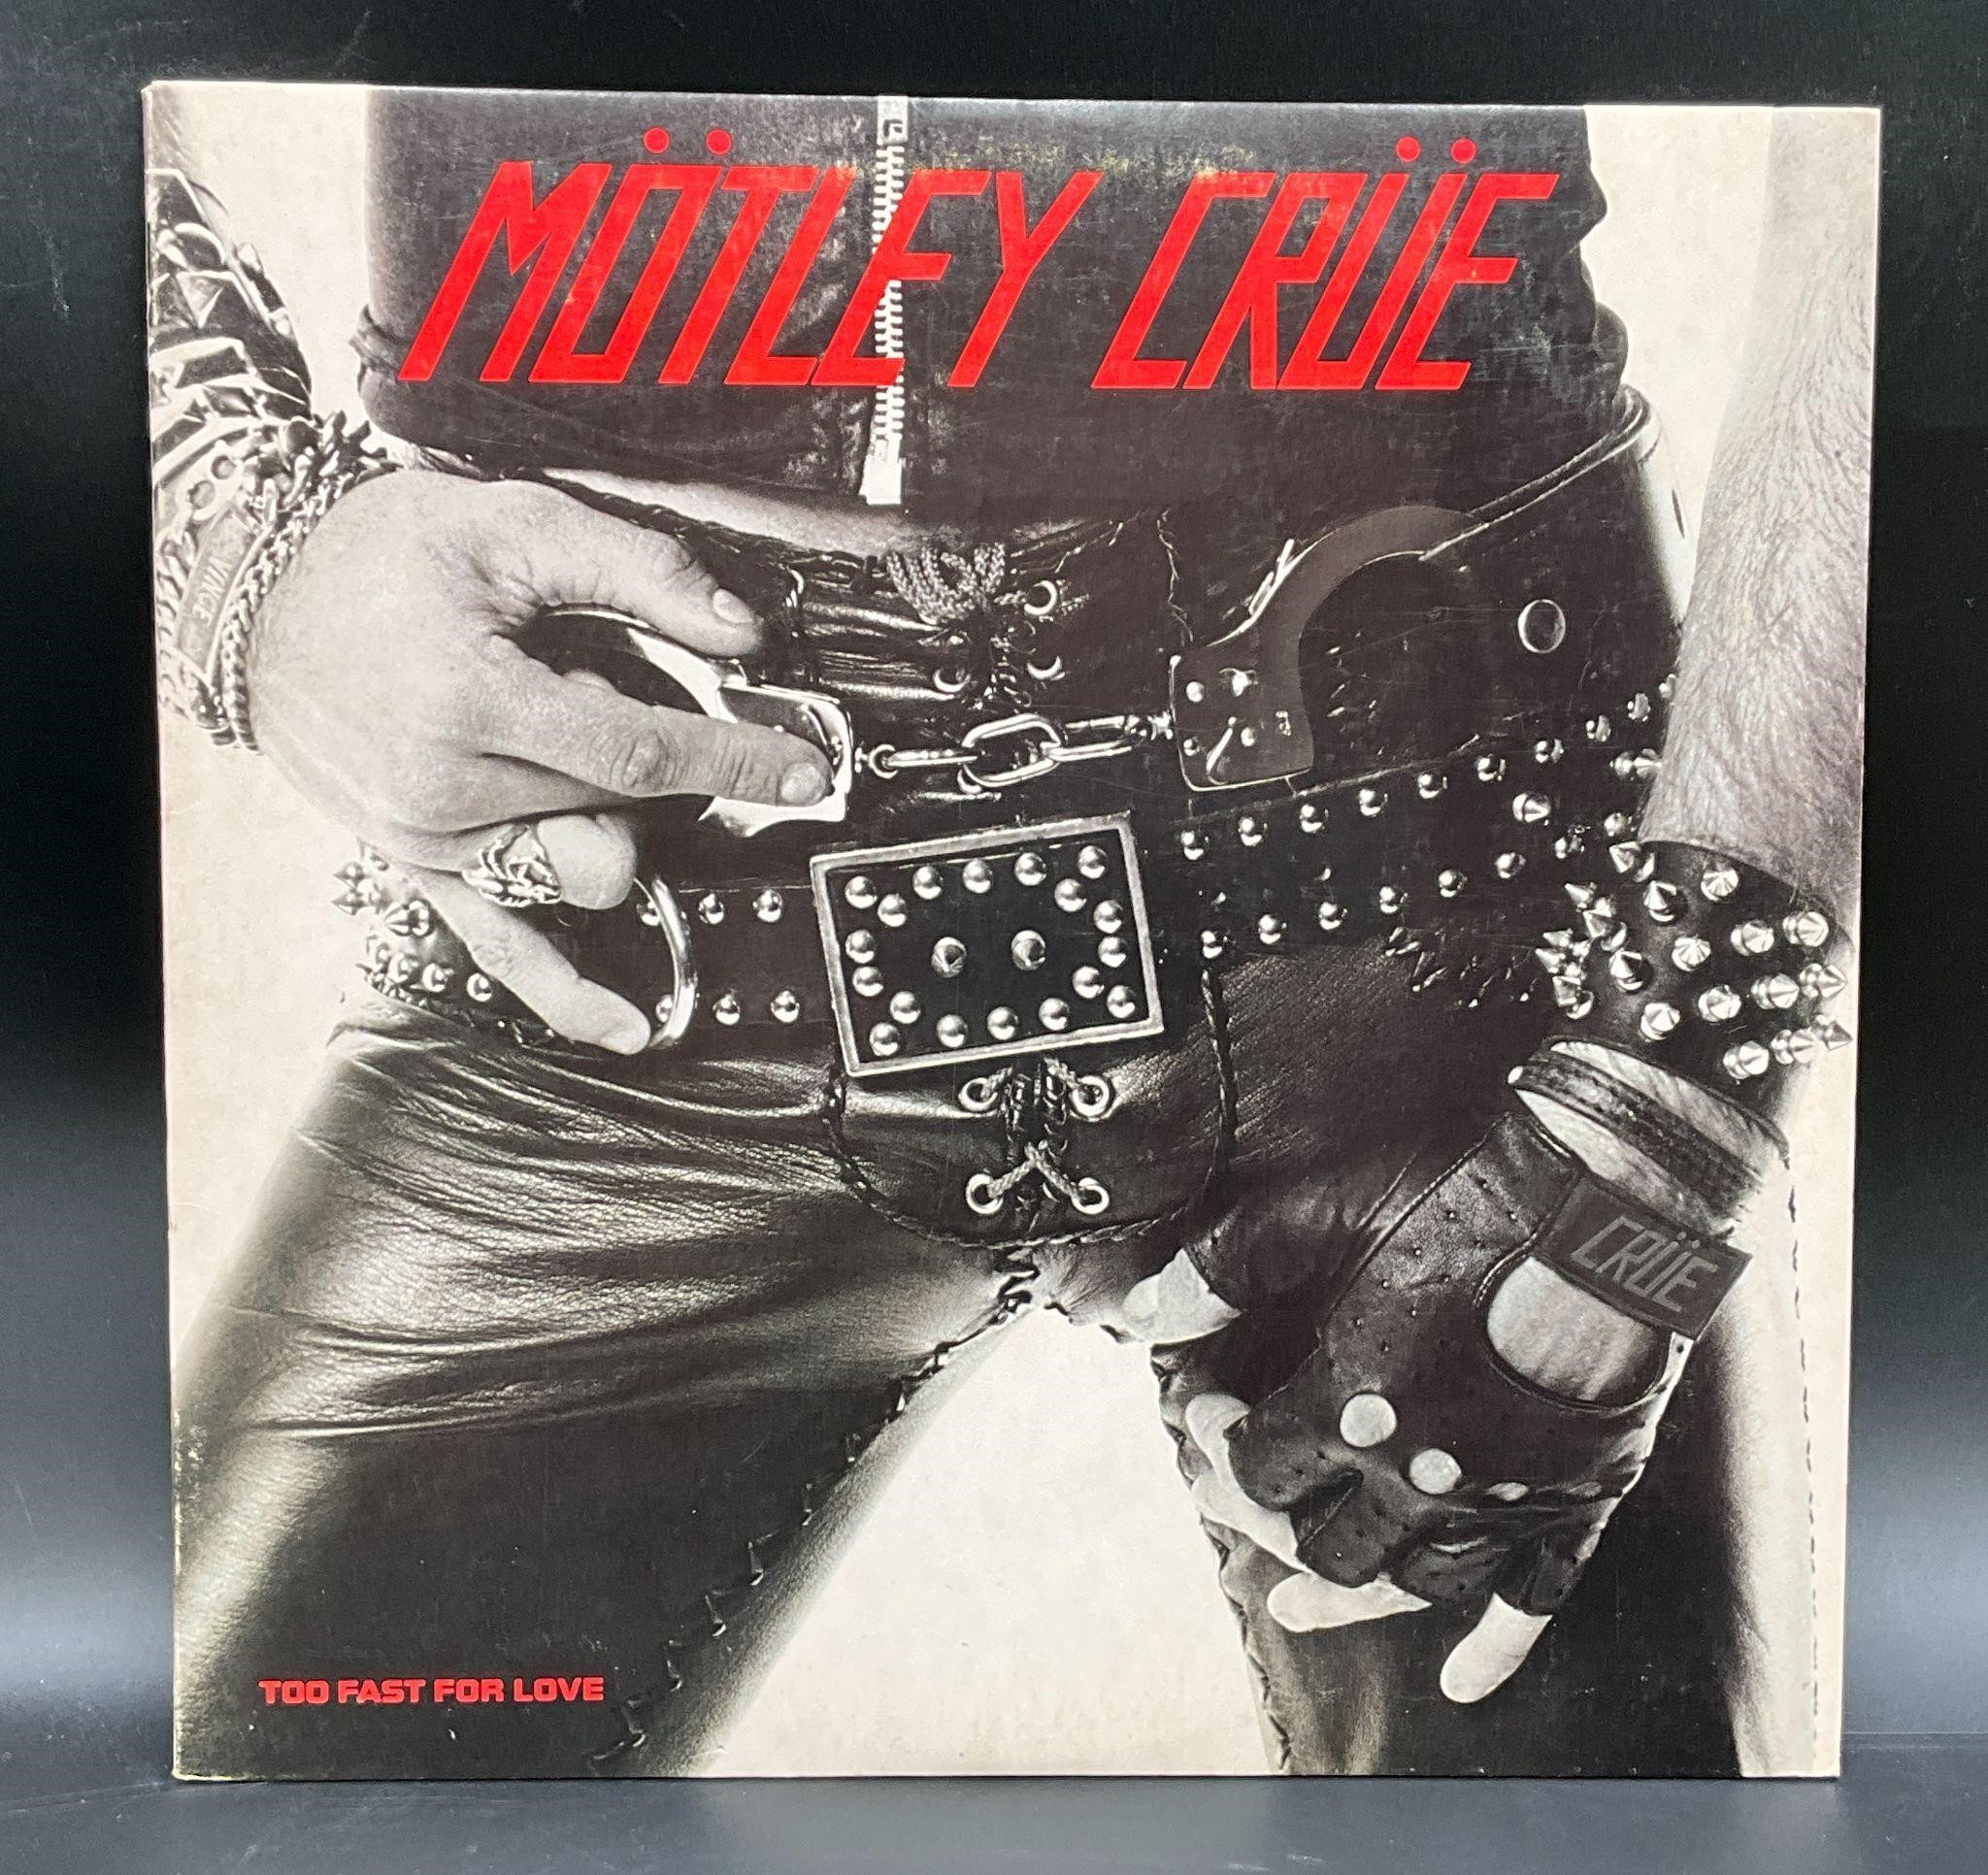 1982 Motley Crue "Too Fast For Love" LP